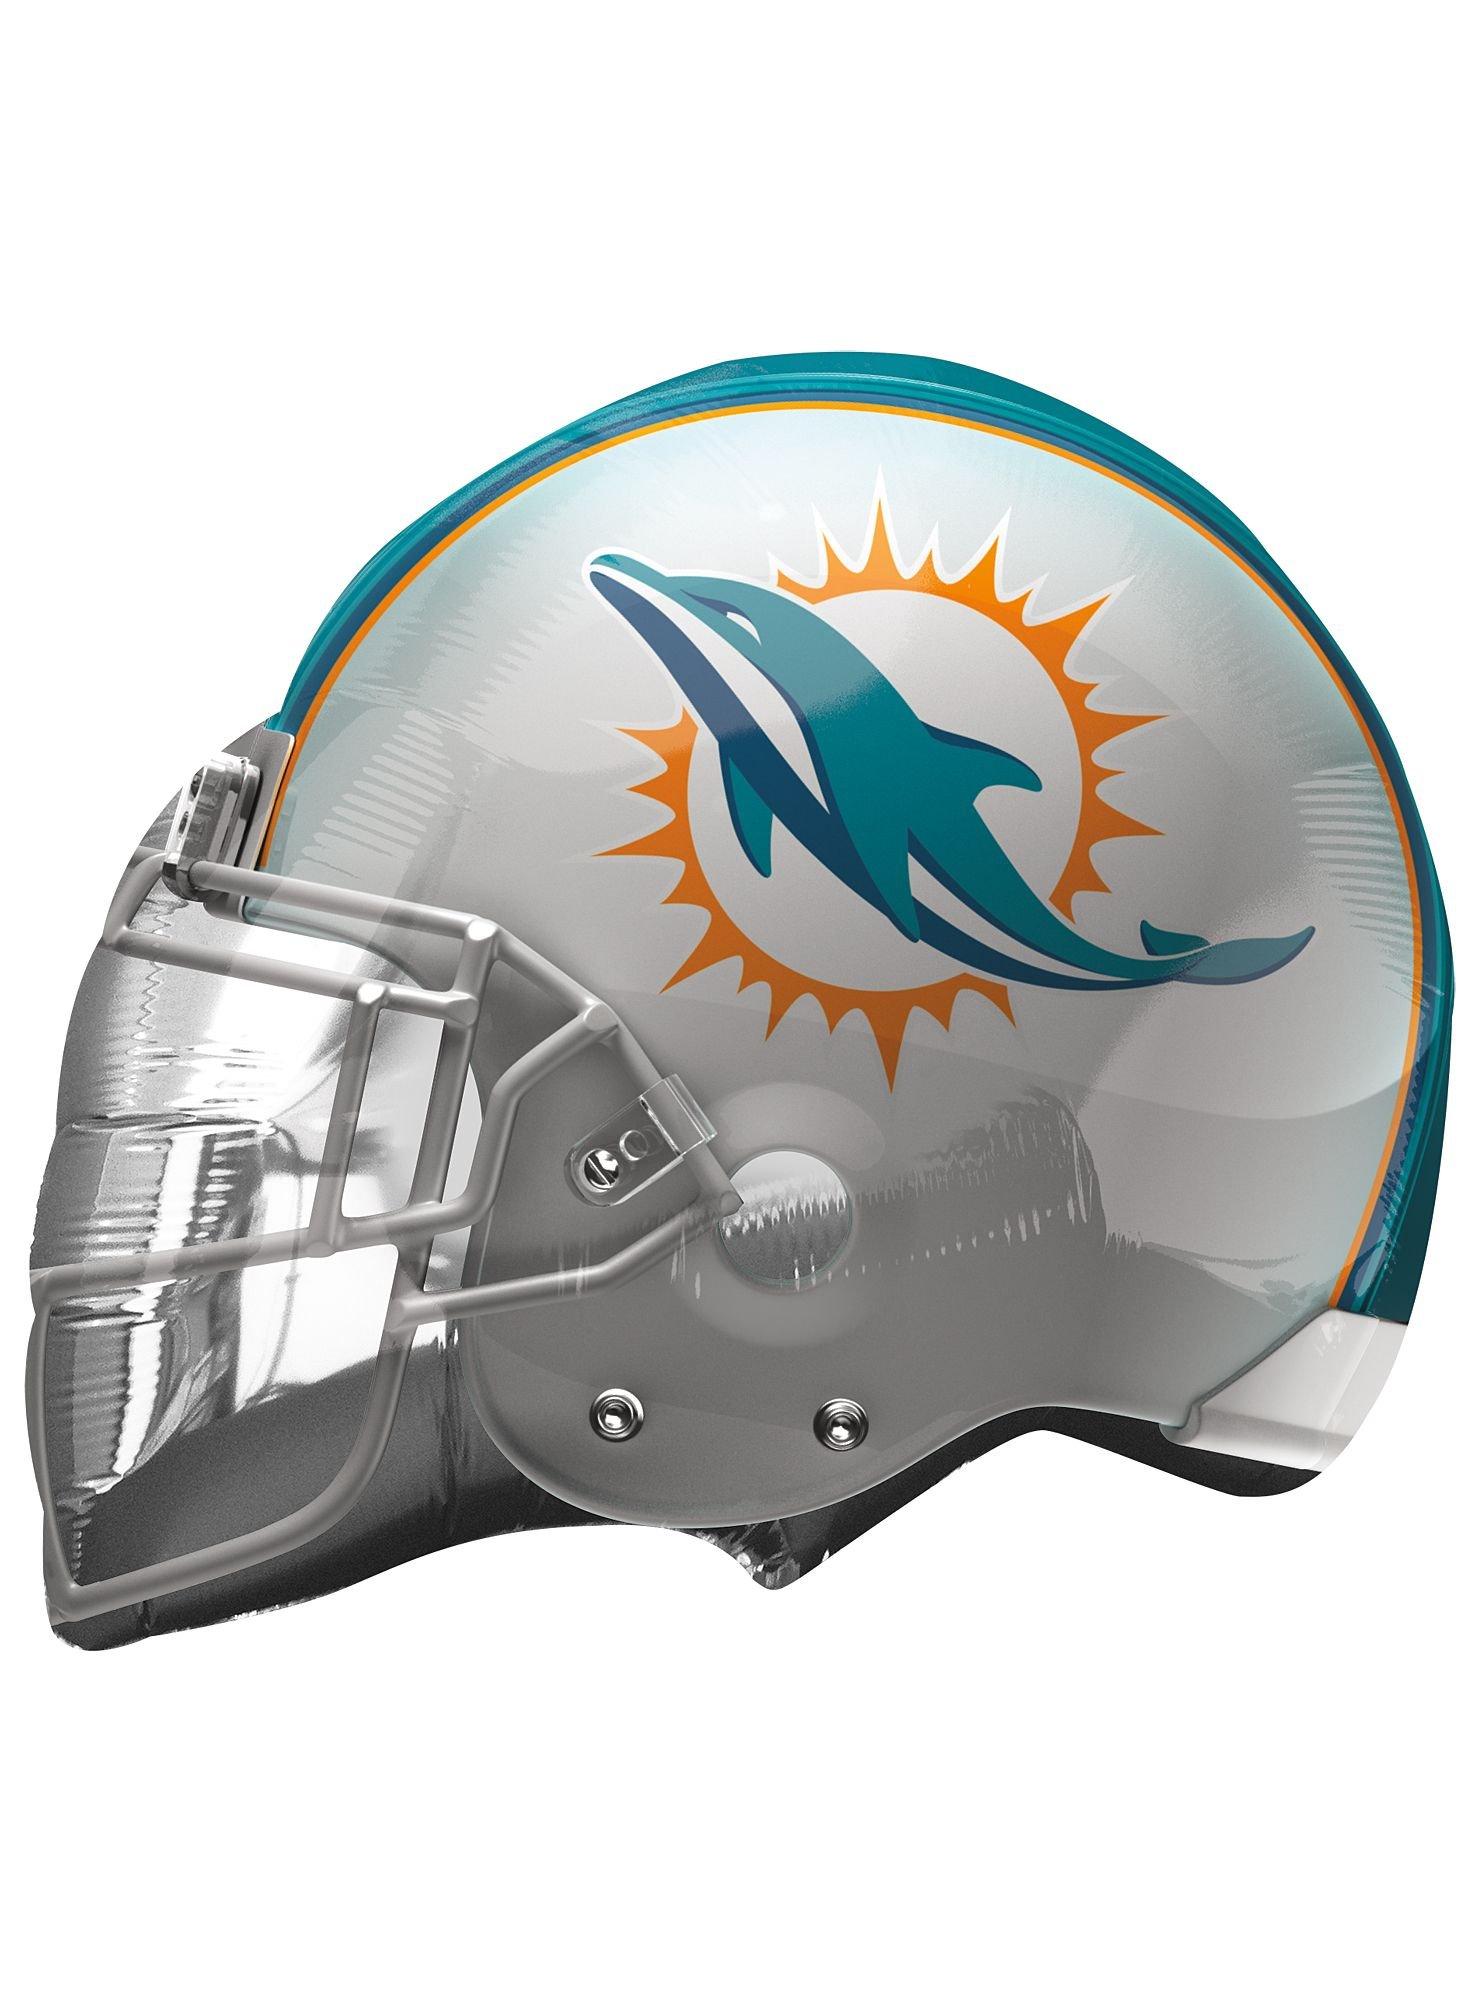 Miami Dolphins Balloon - Helmet